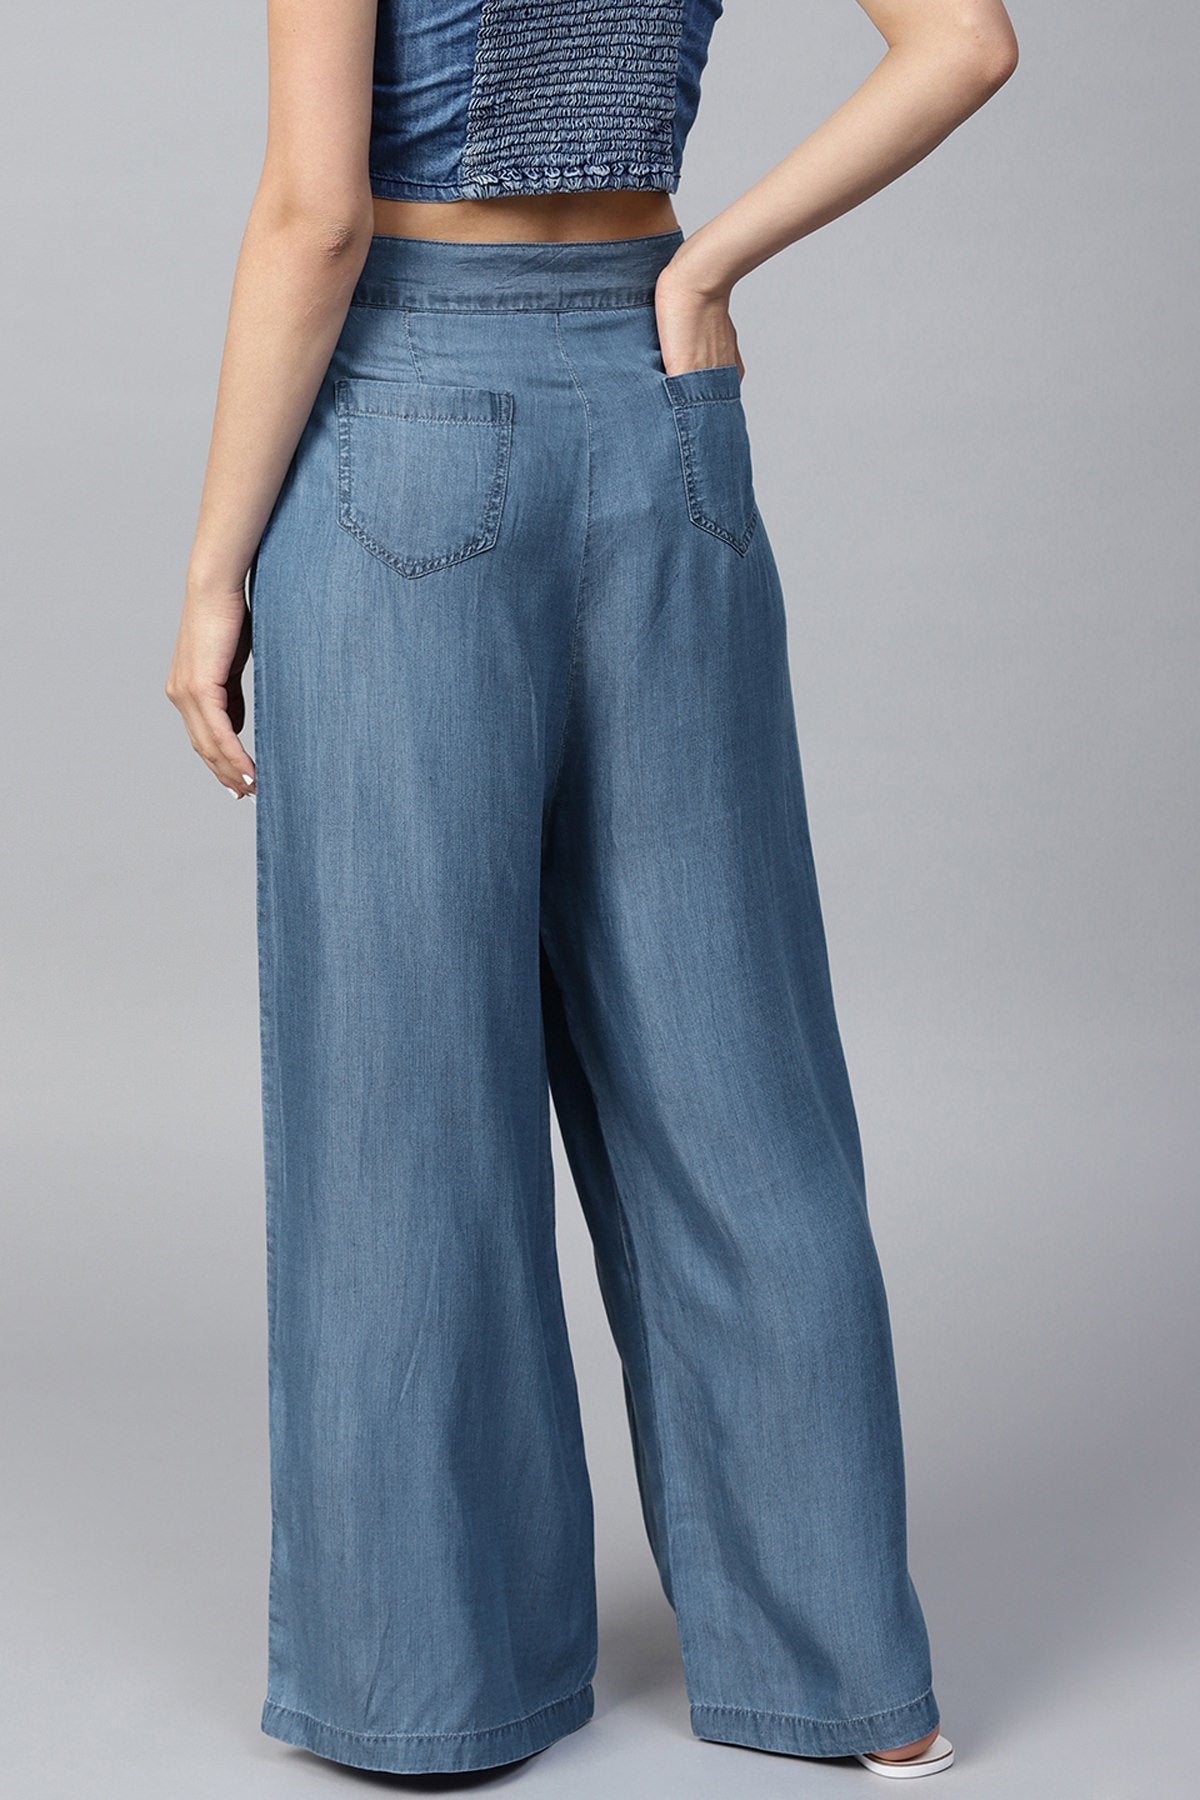 Women's Blue Denim Pants - SASSAFRAS